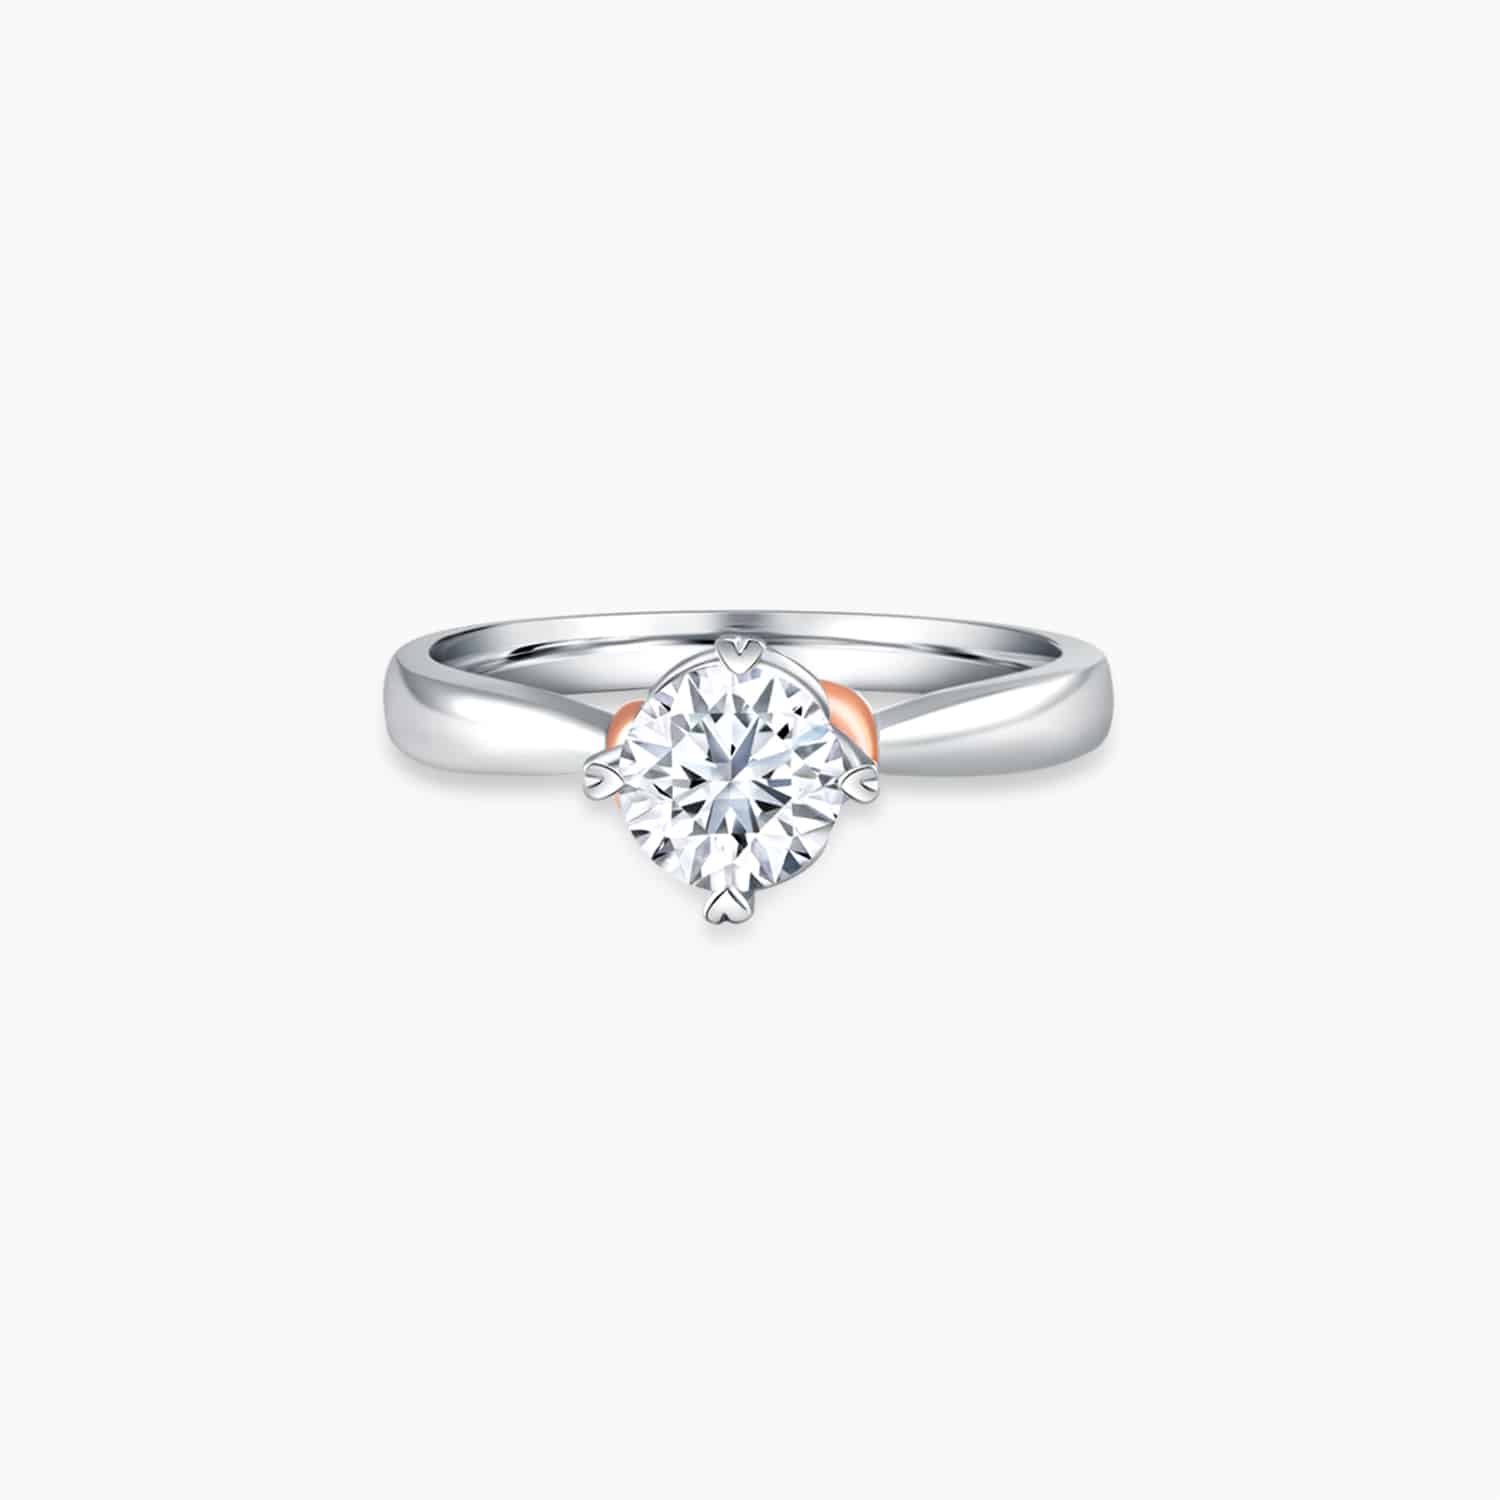 LVC SAY LOVE DESTINY ELISE DIAMOND RING a diamond engagement ring in 18k white gold and rose gold with lab grown diamond cincin diamond 订婚 戒指 钻石 戒指